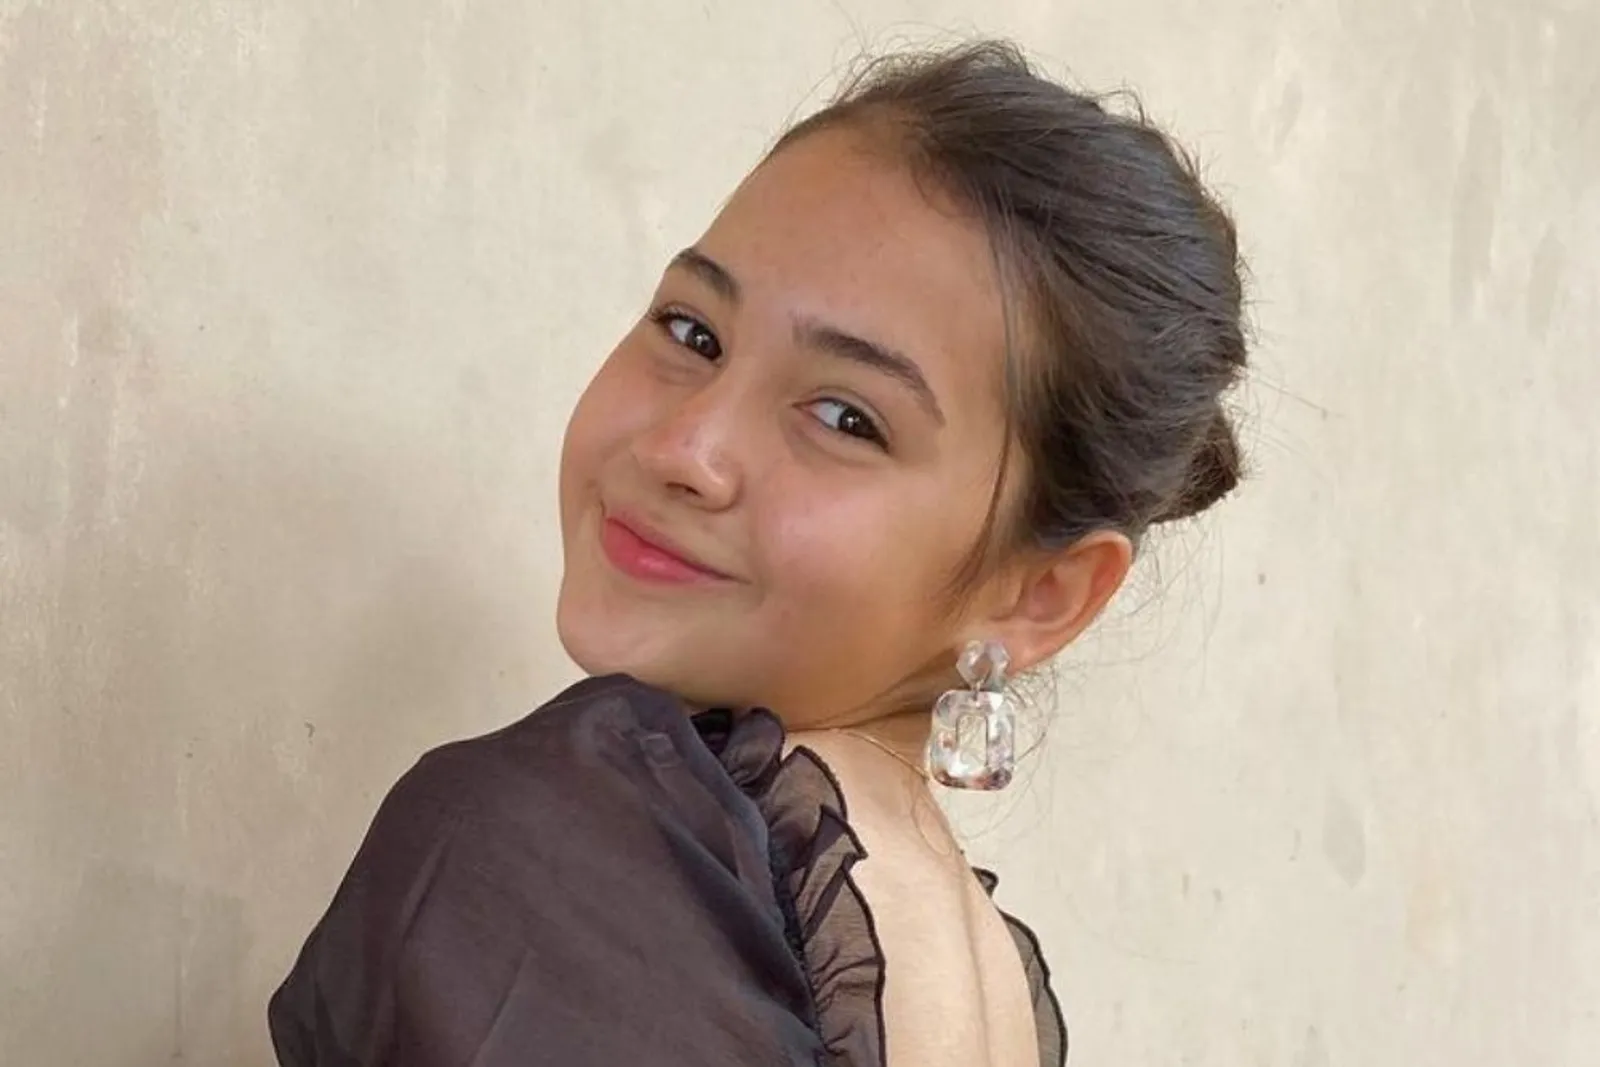 Potret Sandrinna Michelle di Media Sosial, Aktris 14 Tahun yang Kece